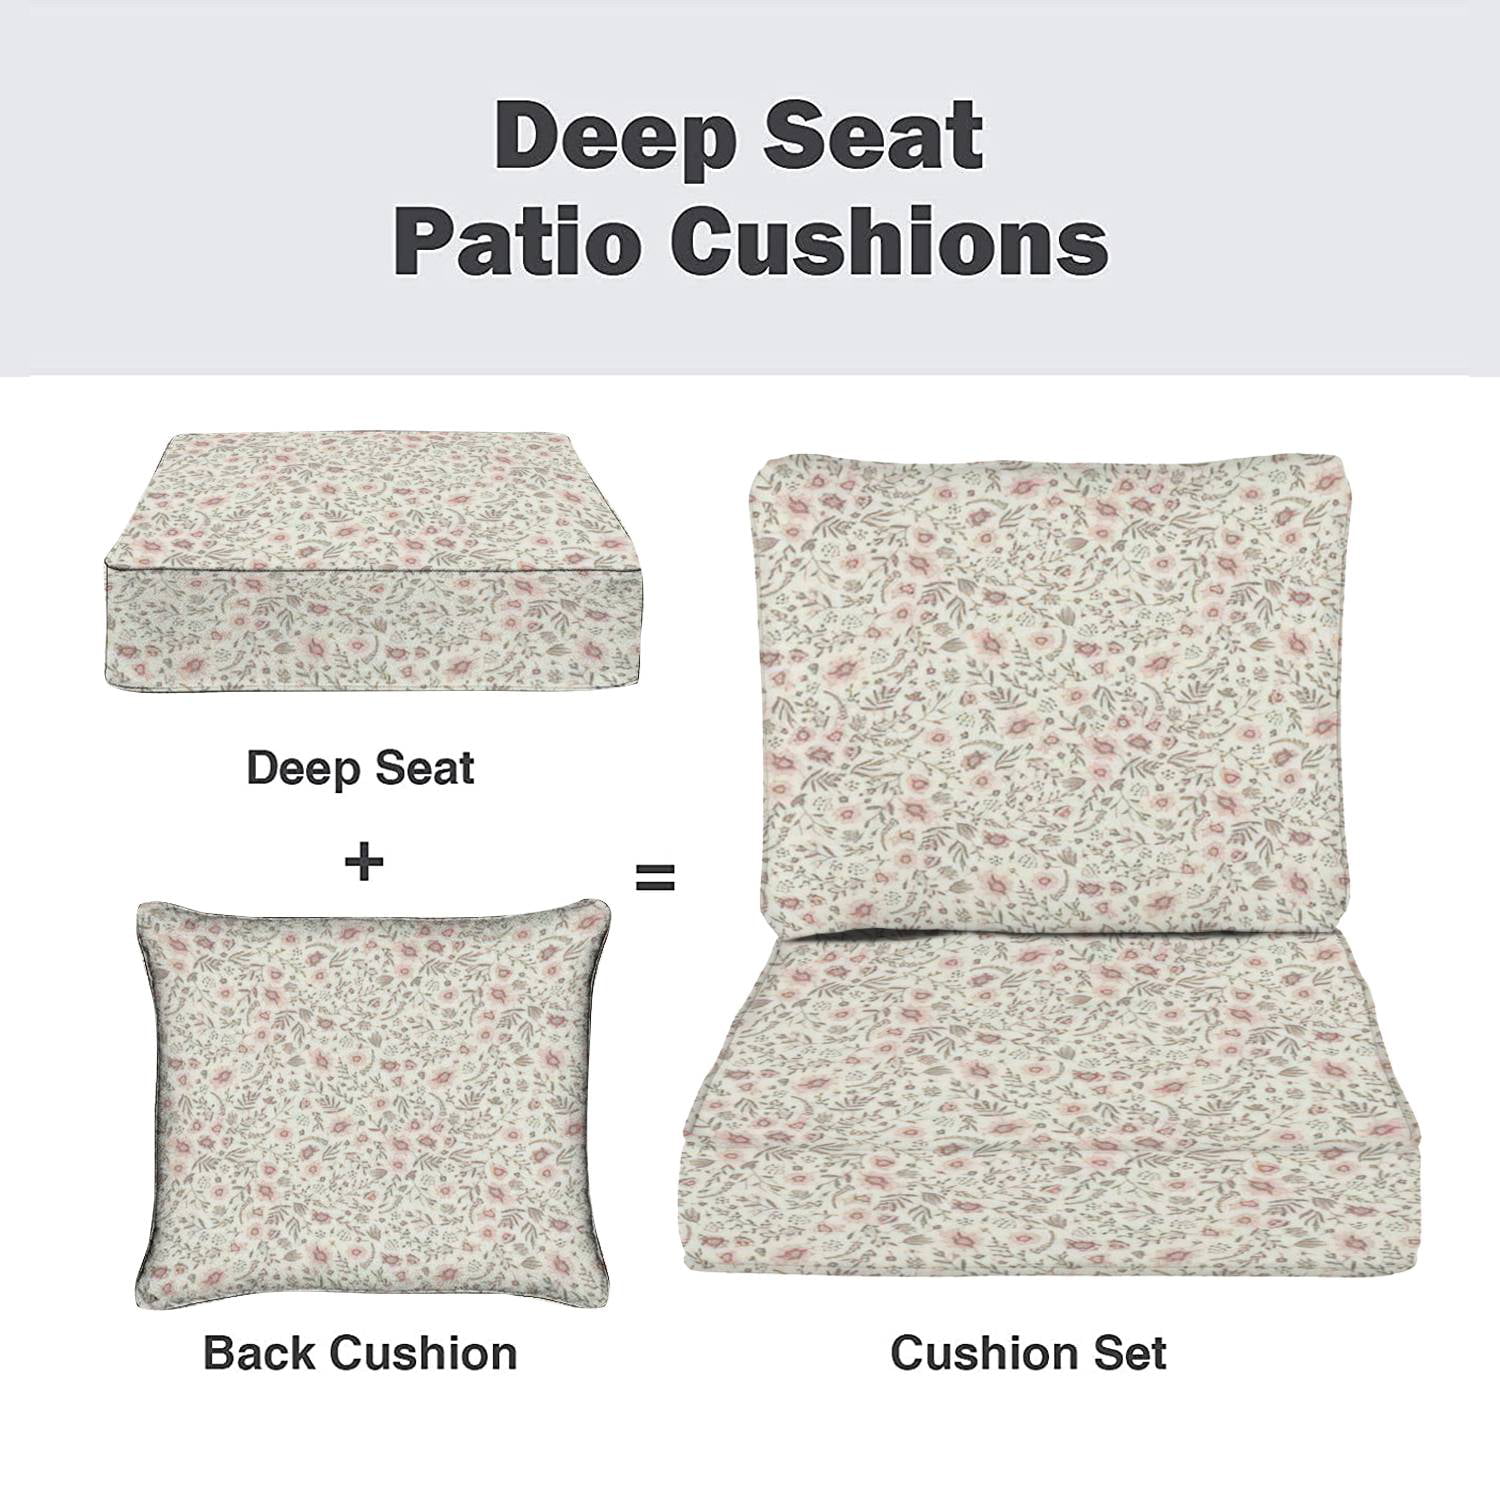 Window Seat Cushion, Purple Flowers, Farmhouse Bench Pillows